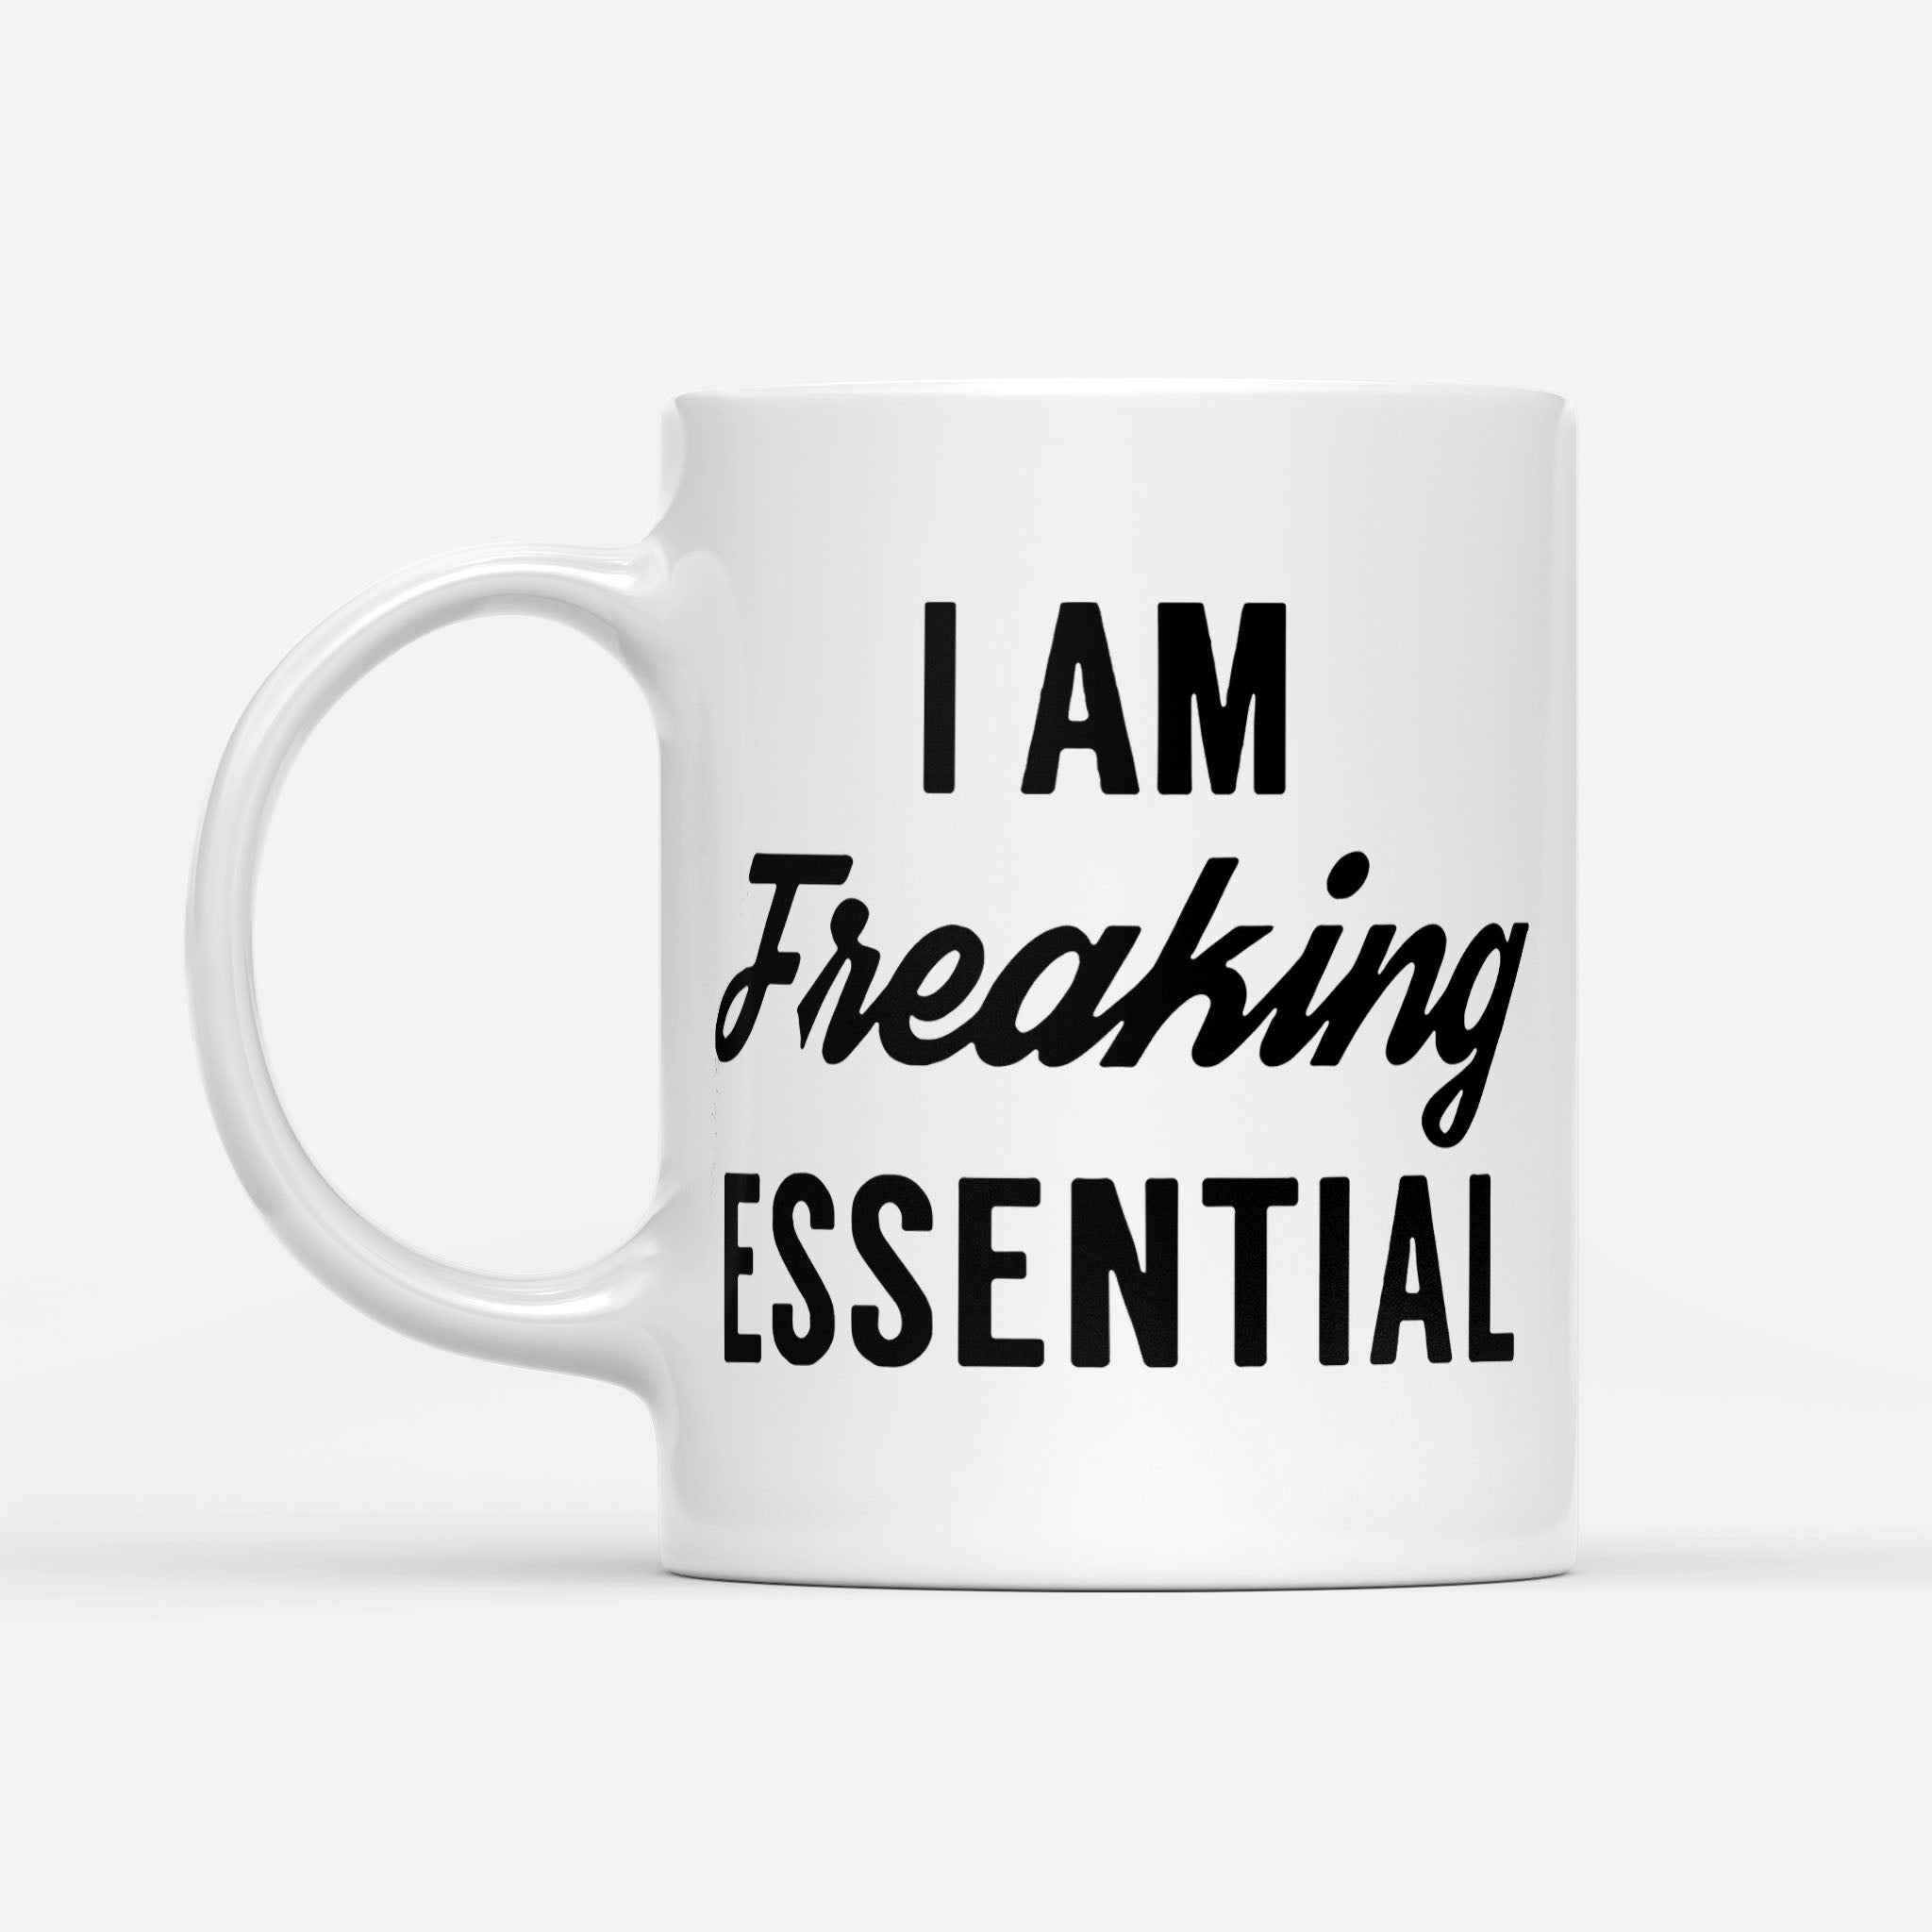 I Am Freaking Essential - White Mug